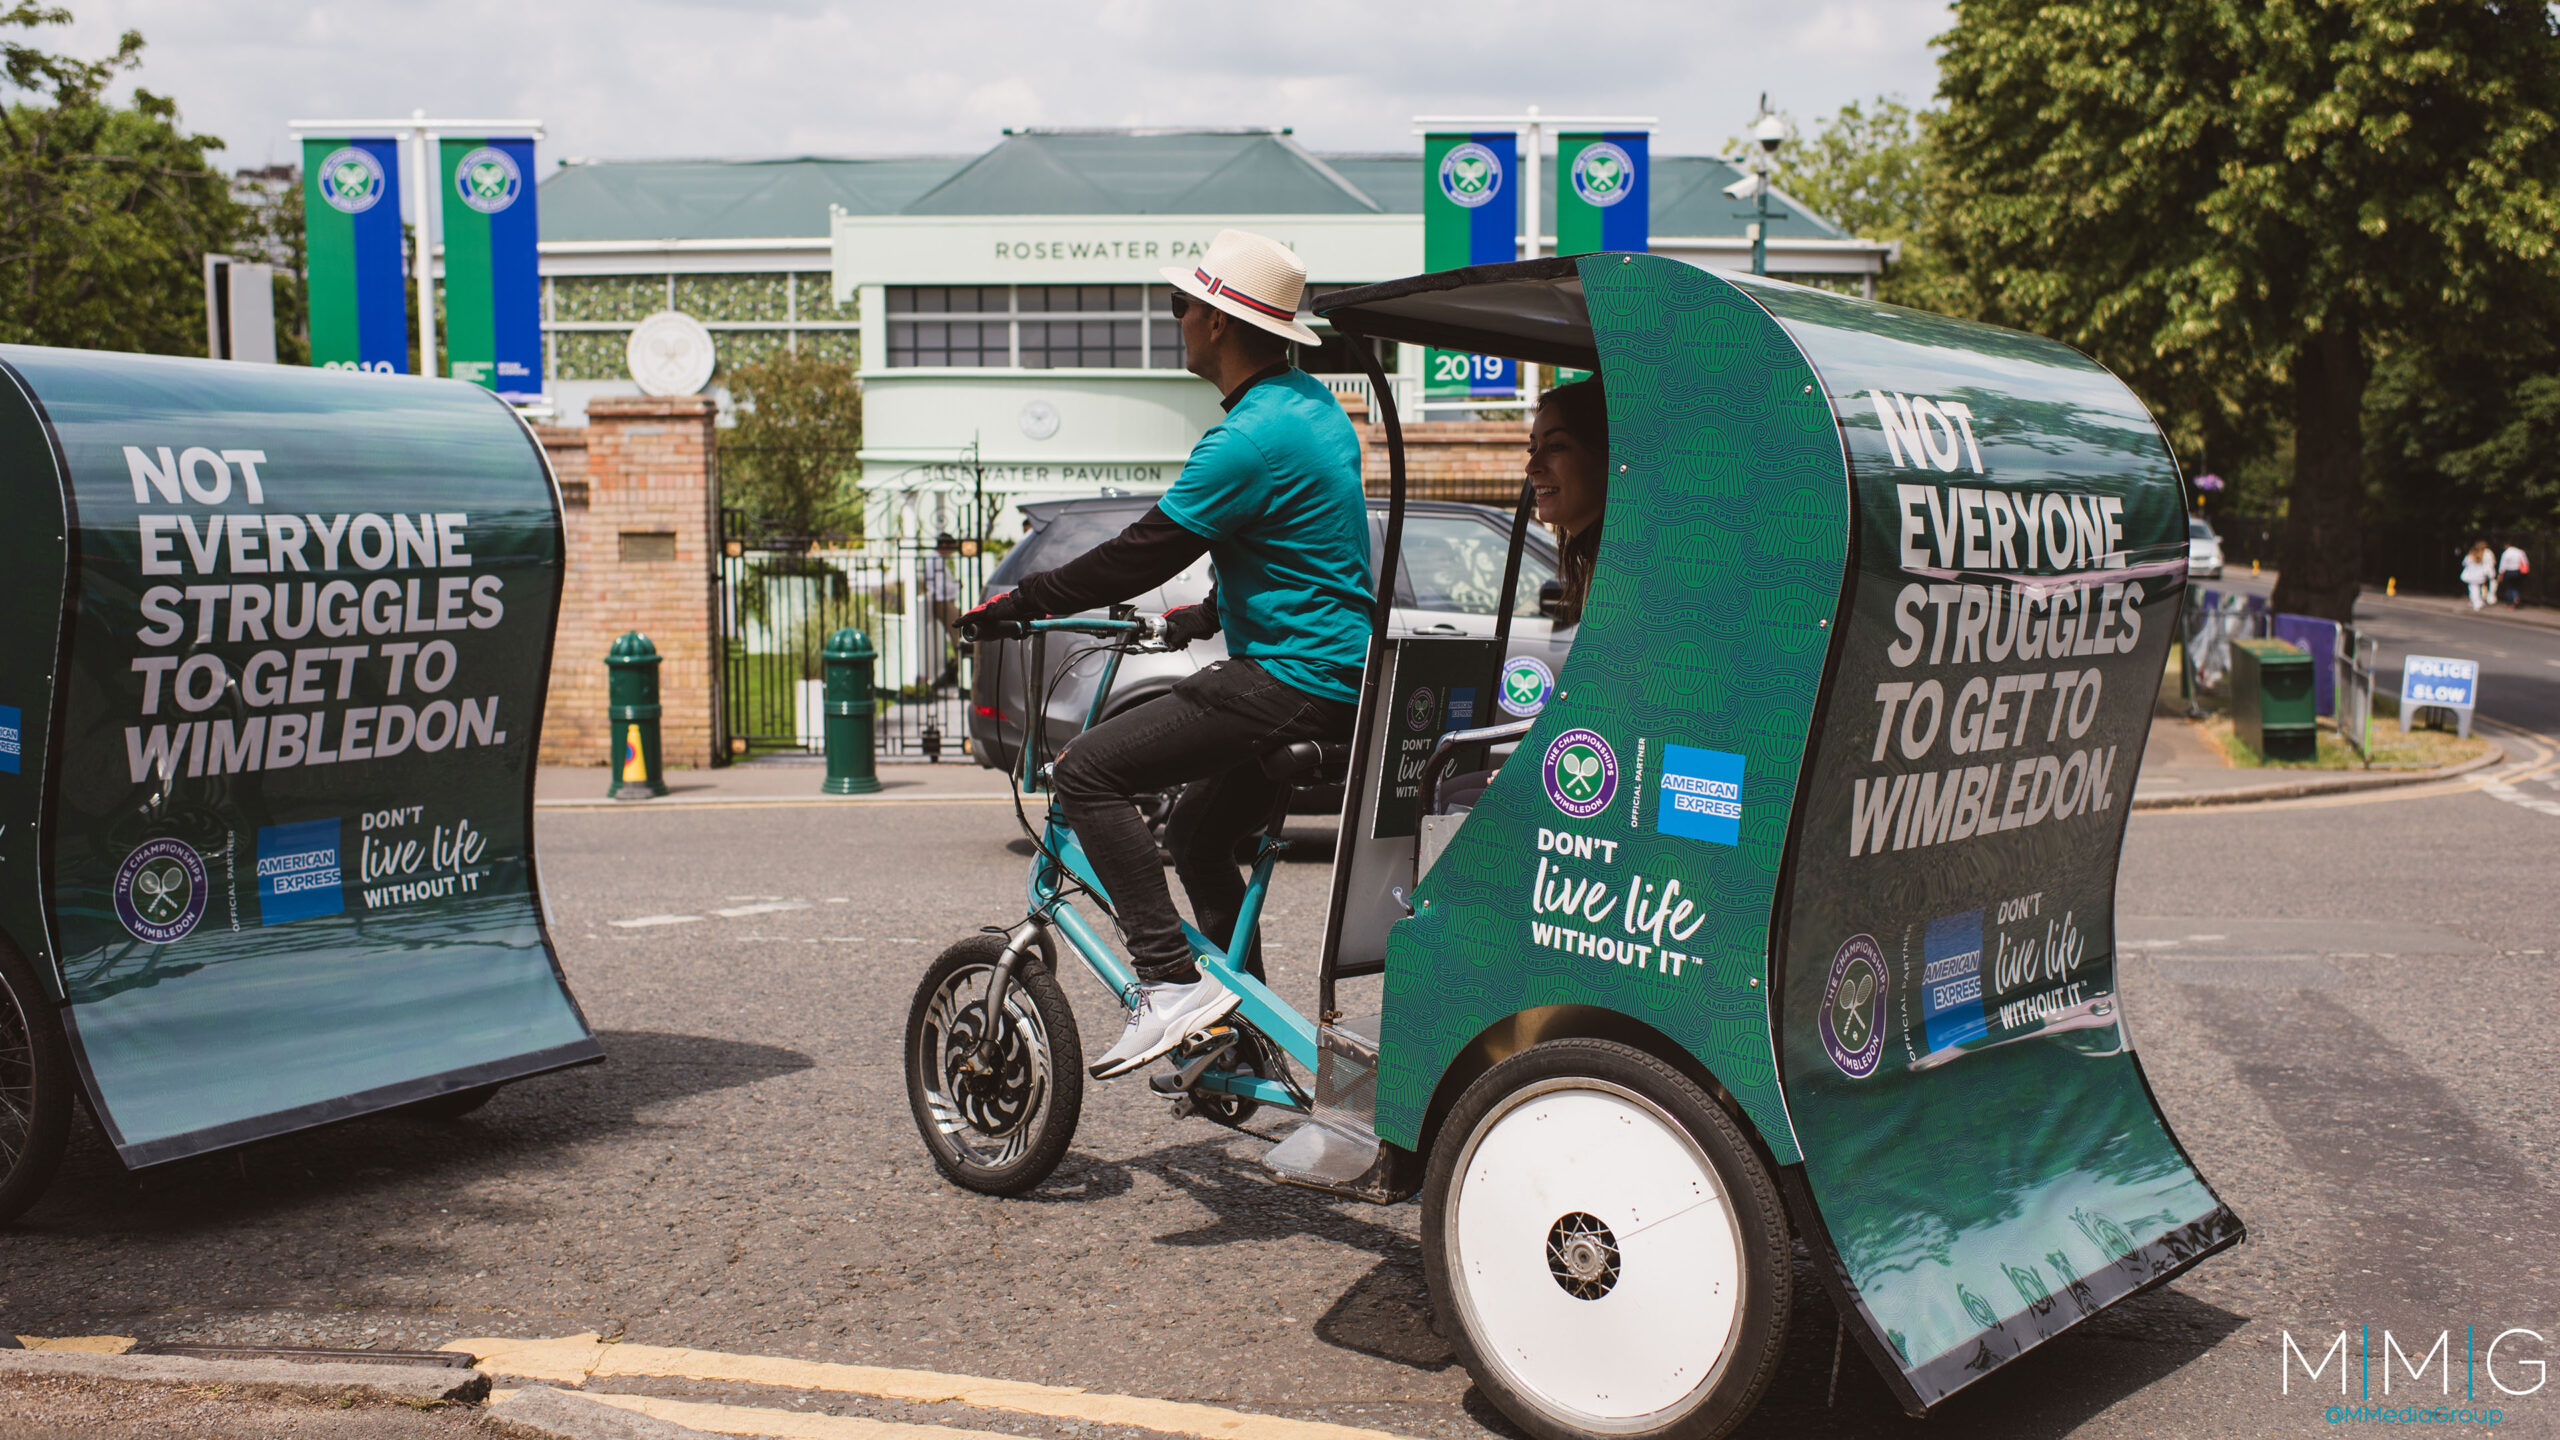 American Express using Pedicabs to target Wimbledon